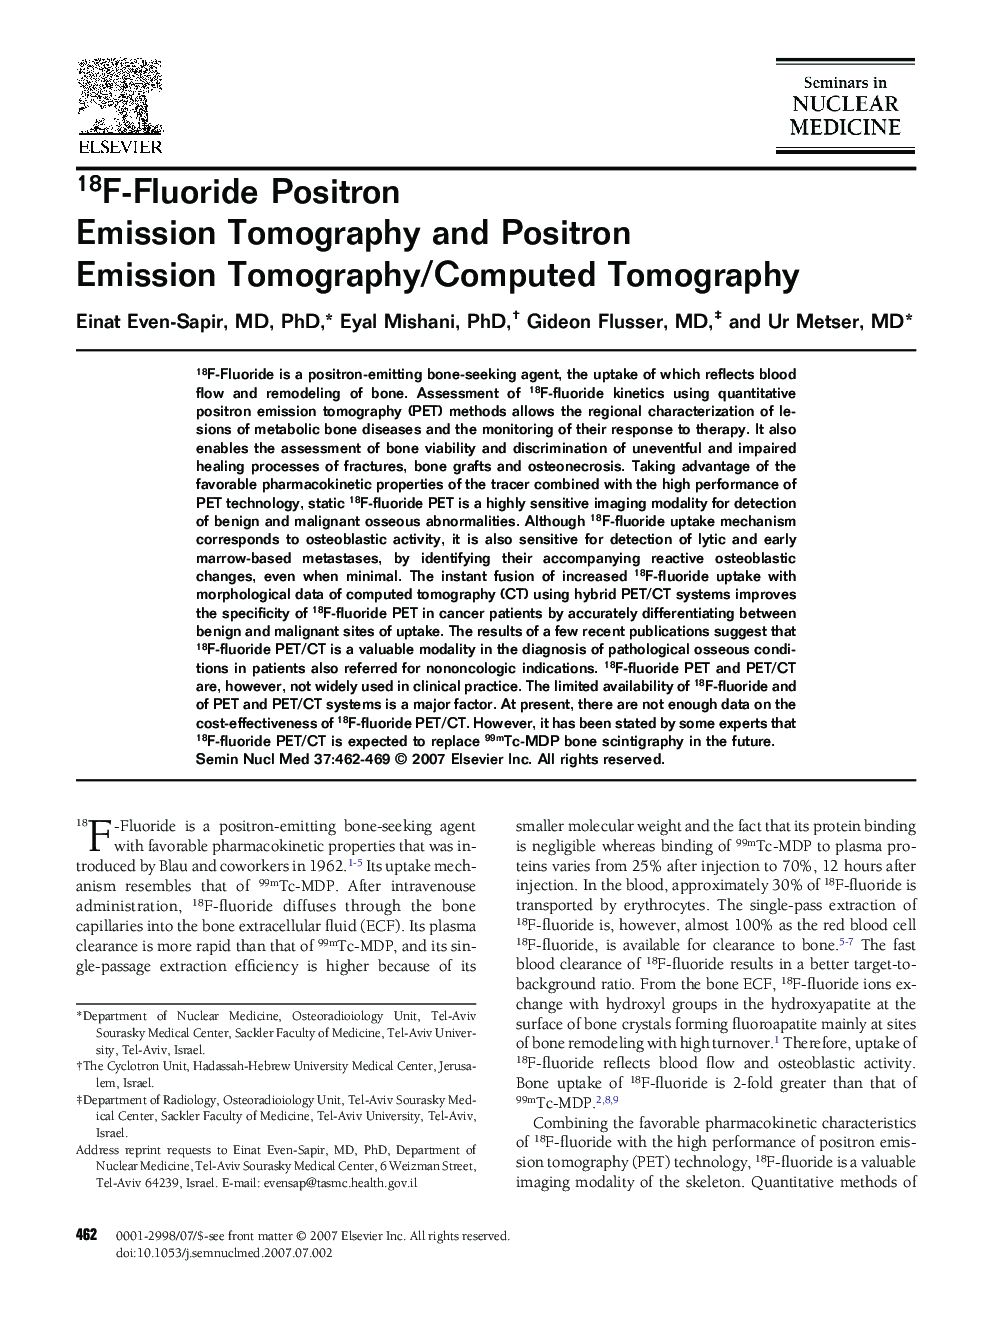 18F-Fluoride Positron Emission Tomography and Positron Emission Tomography/Computed Tomography